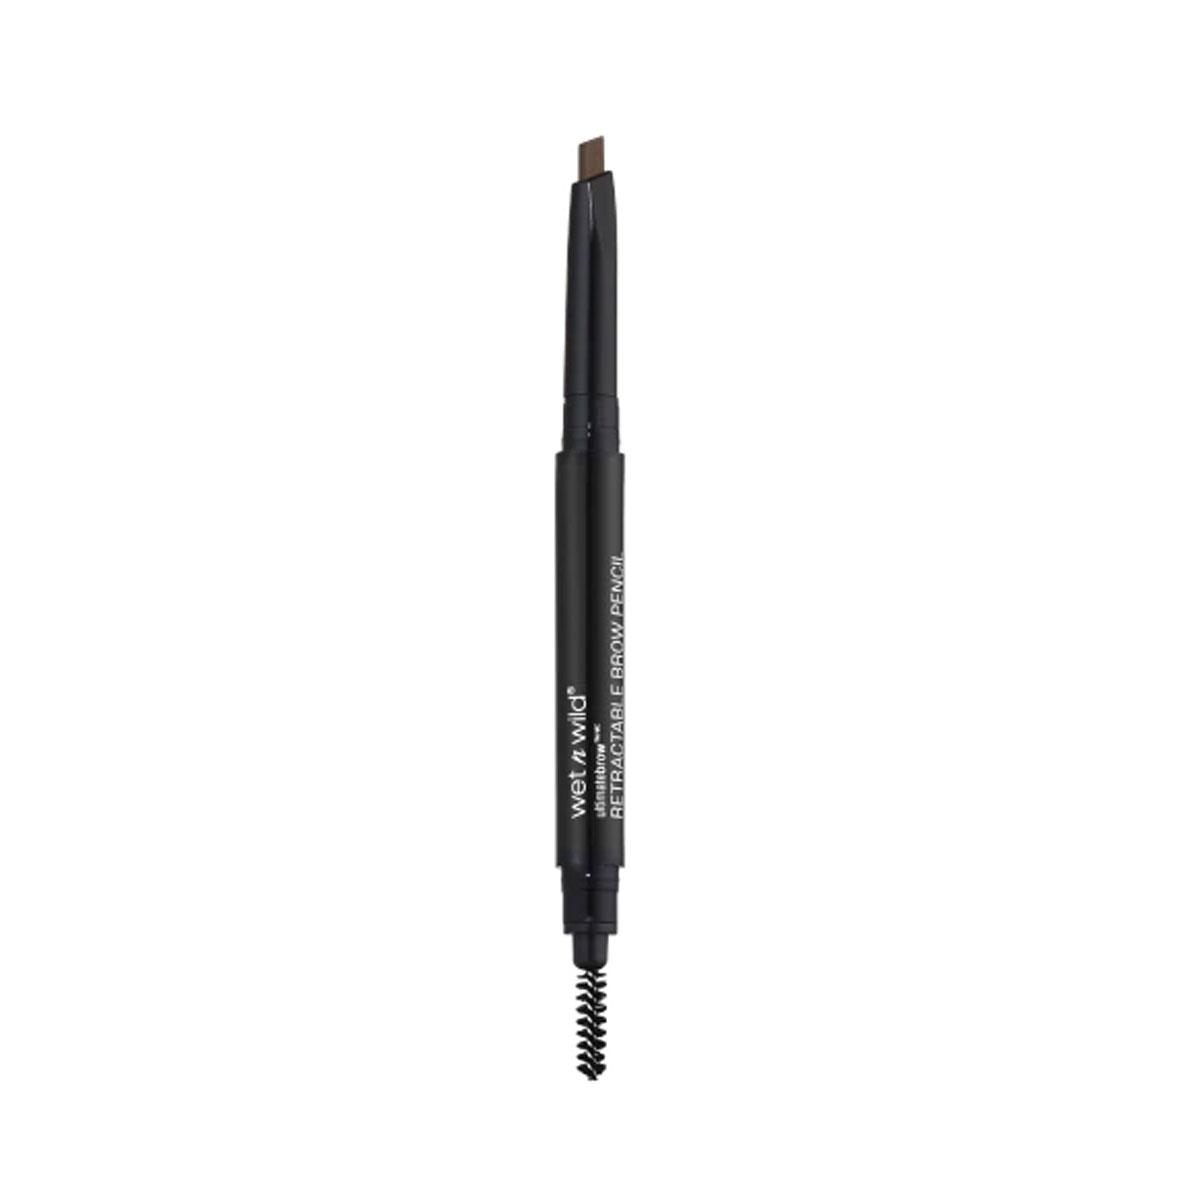 مداد ابروی اولتیمیت برو - Ultimate brow retractable pencil 